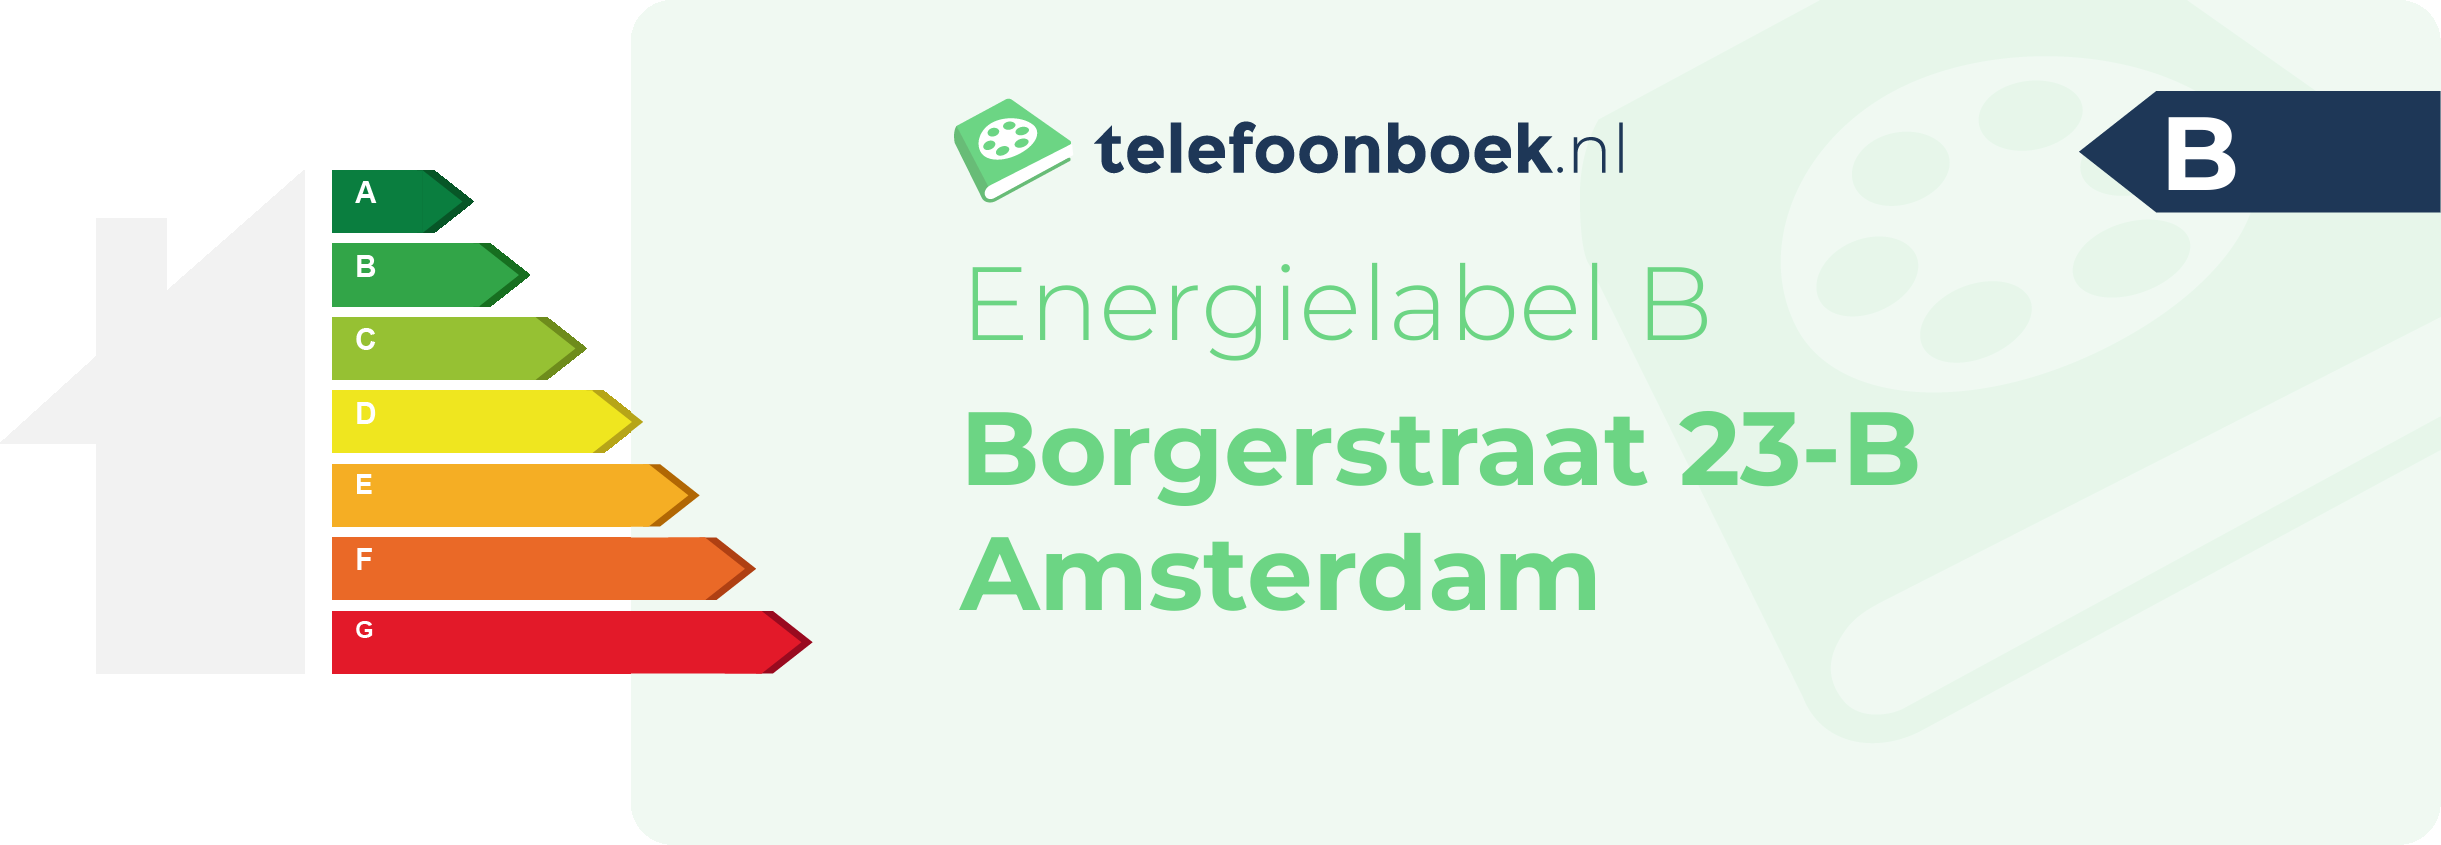 Energielabel Borgerstraat 23-B Amsterdam